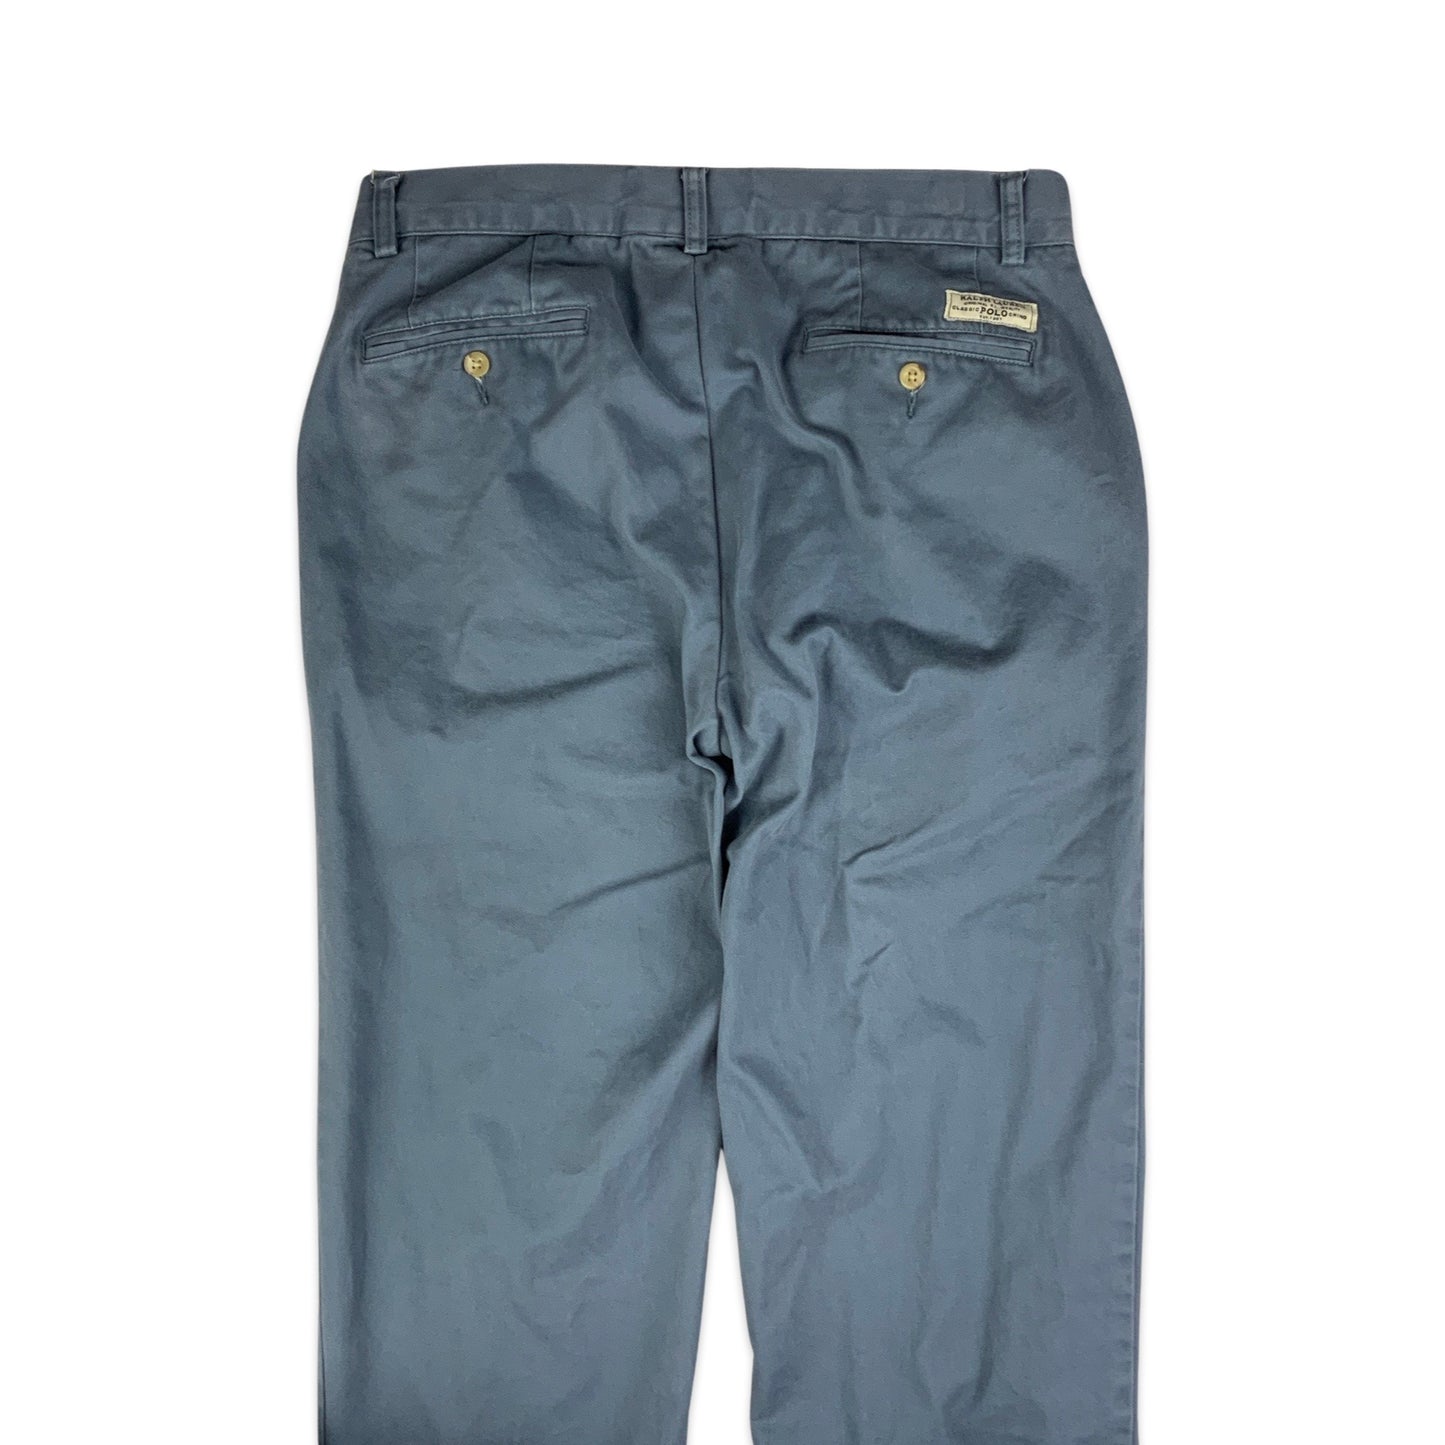 Ralph Lauren Blue Chino Trousers 33W 31L